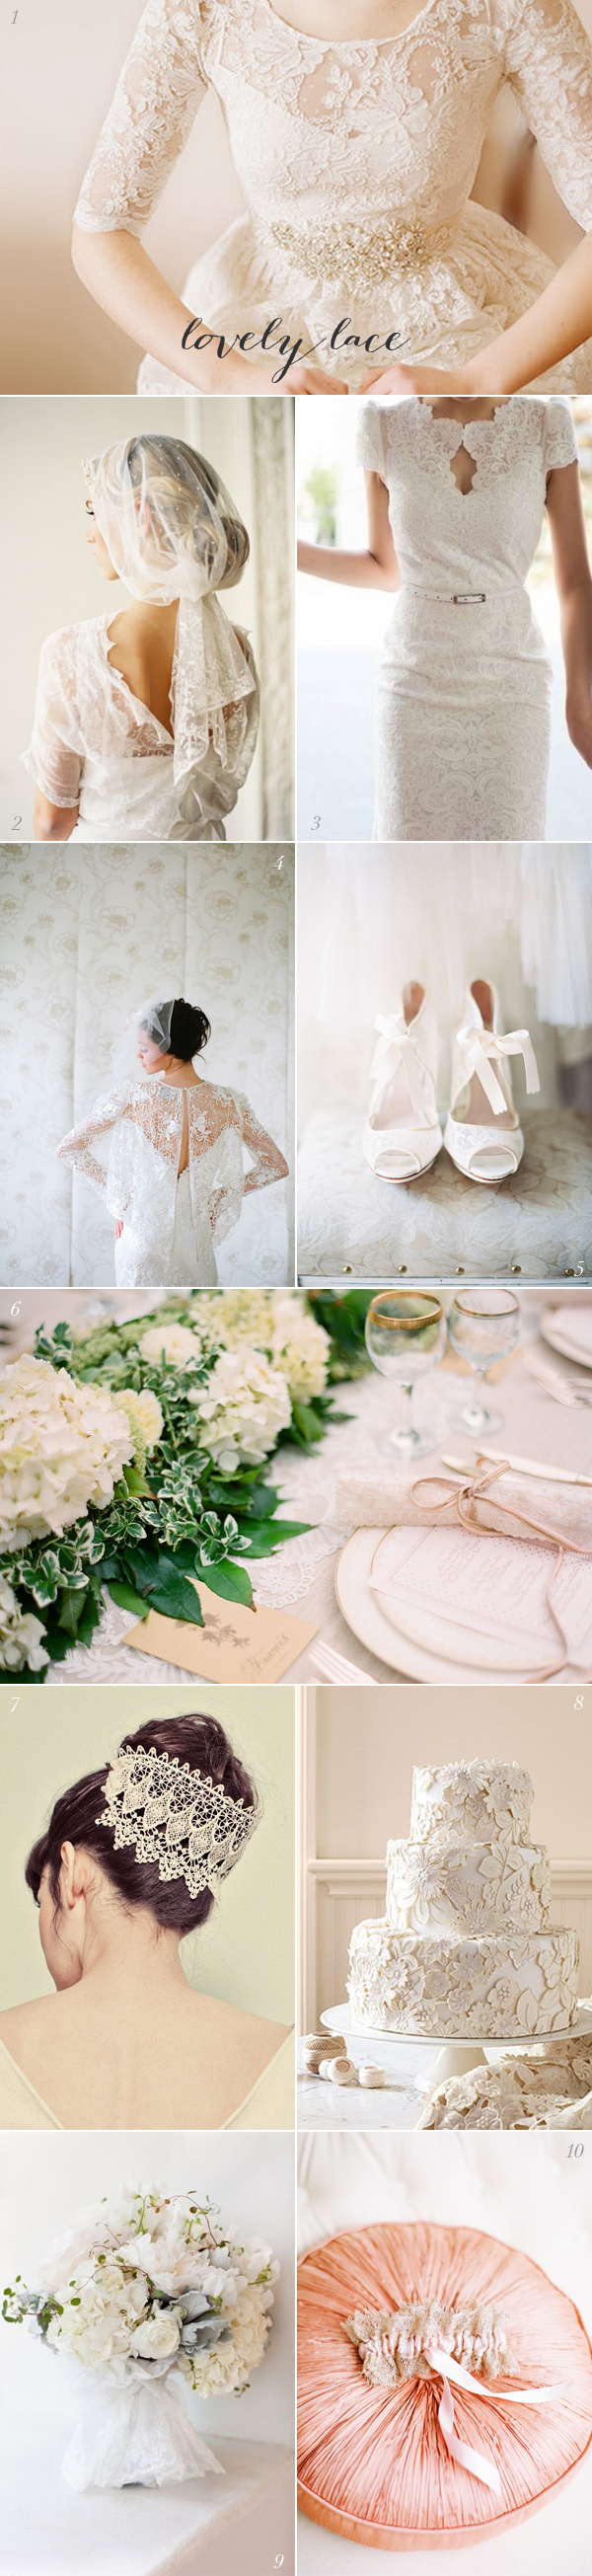 Lace Wedding Inspiration